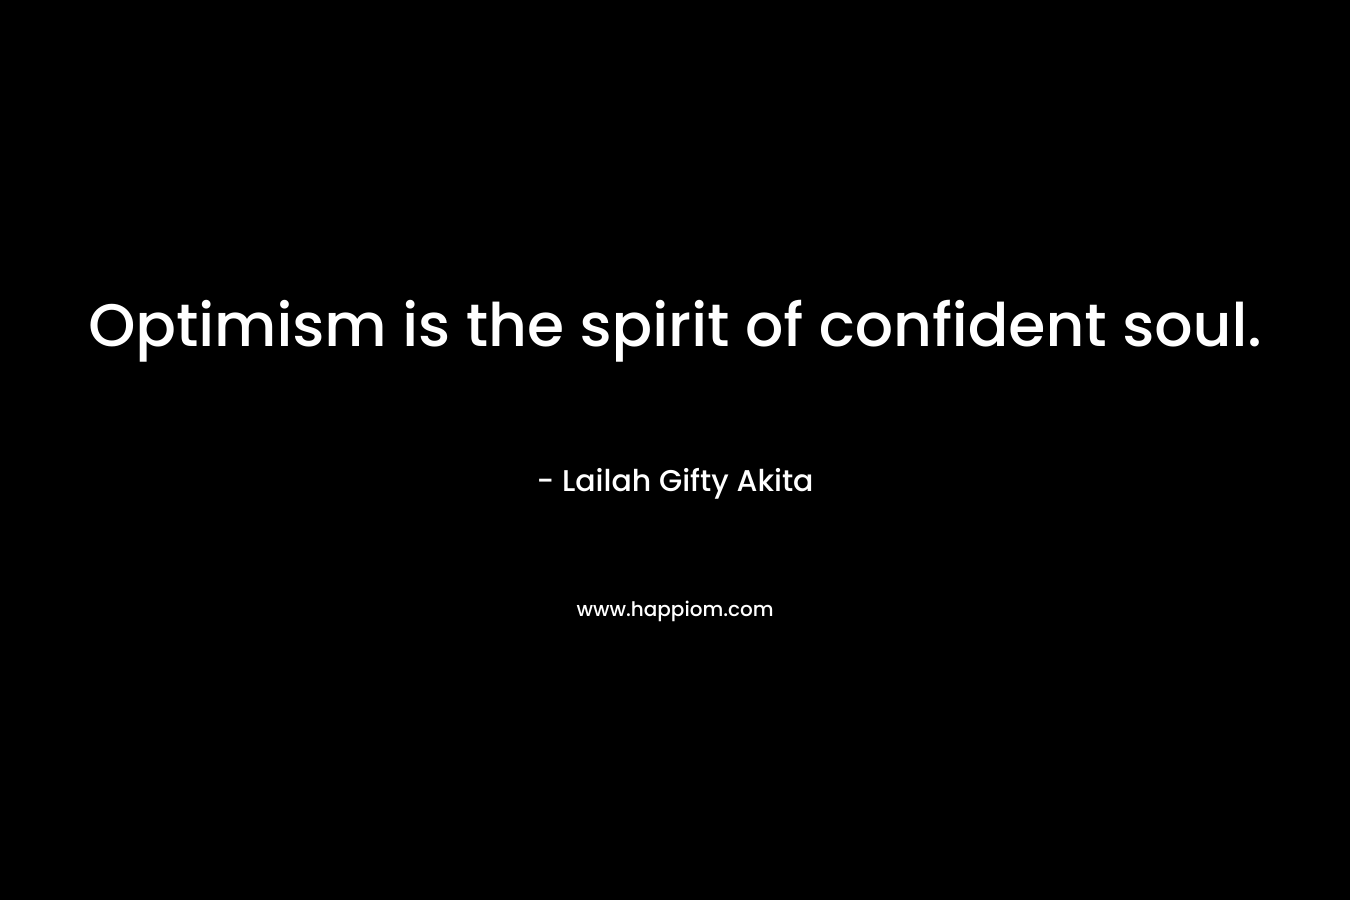 Optimism is the spirit of confident soul.